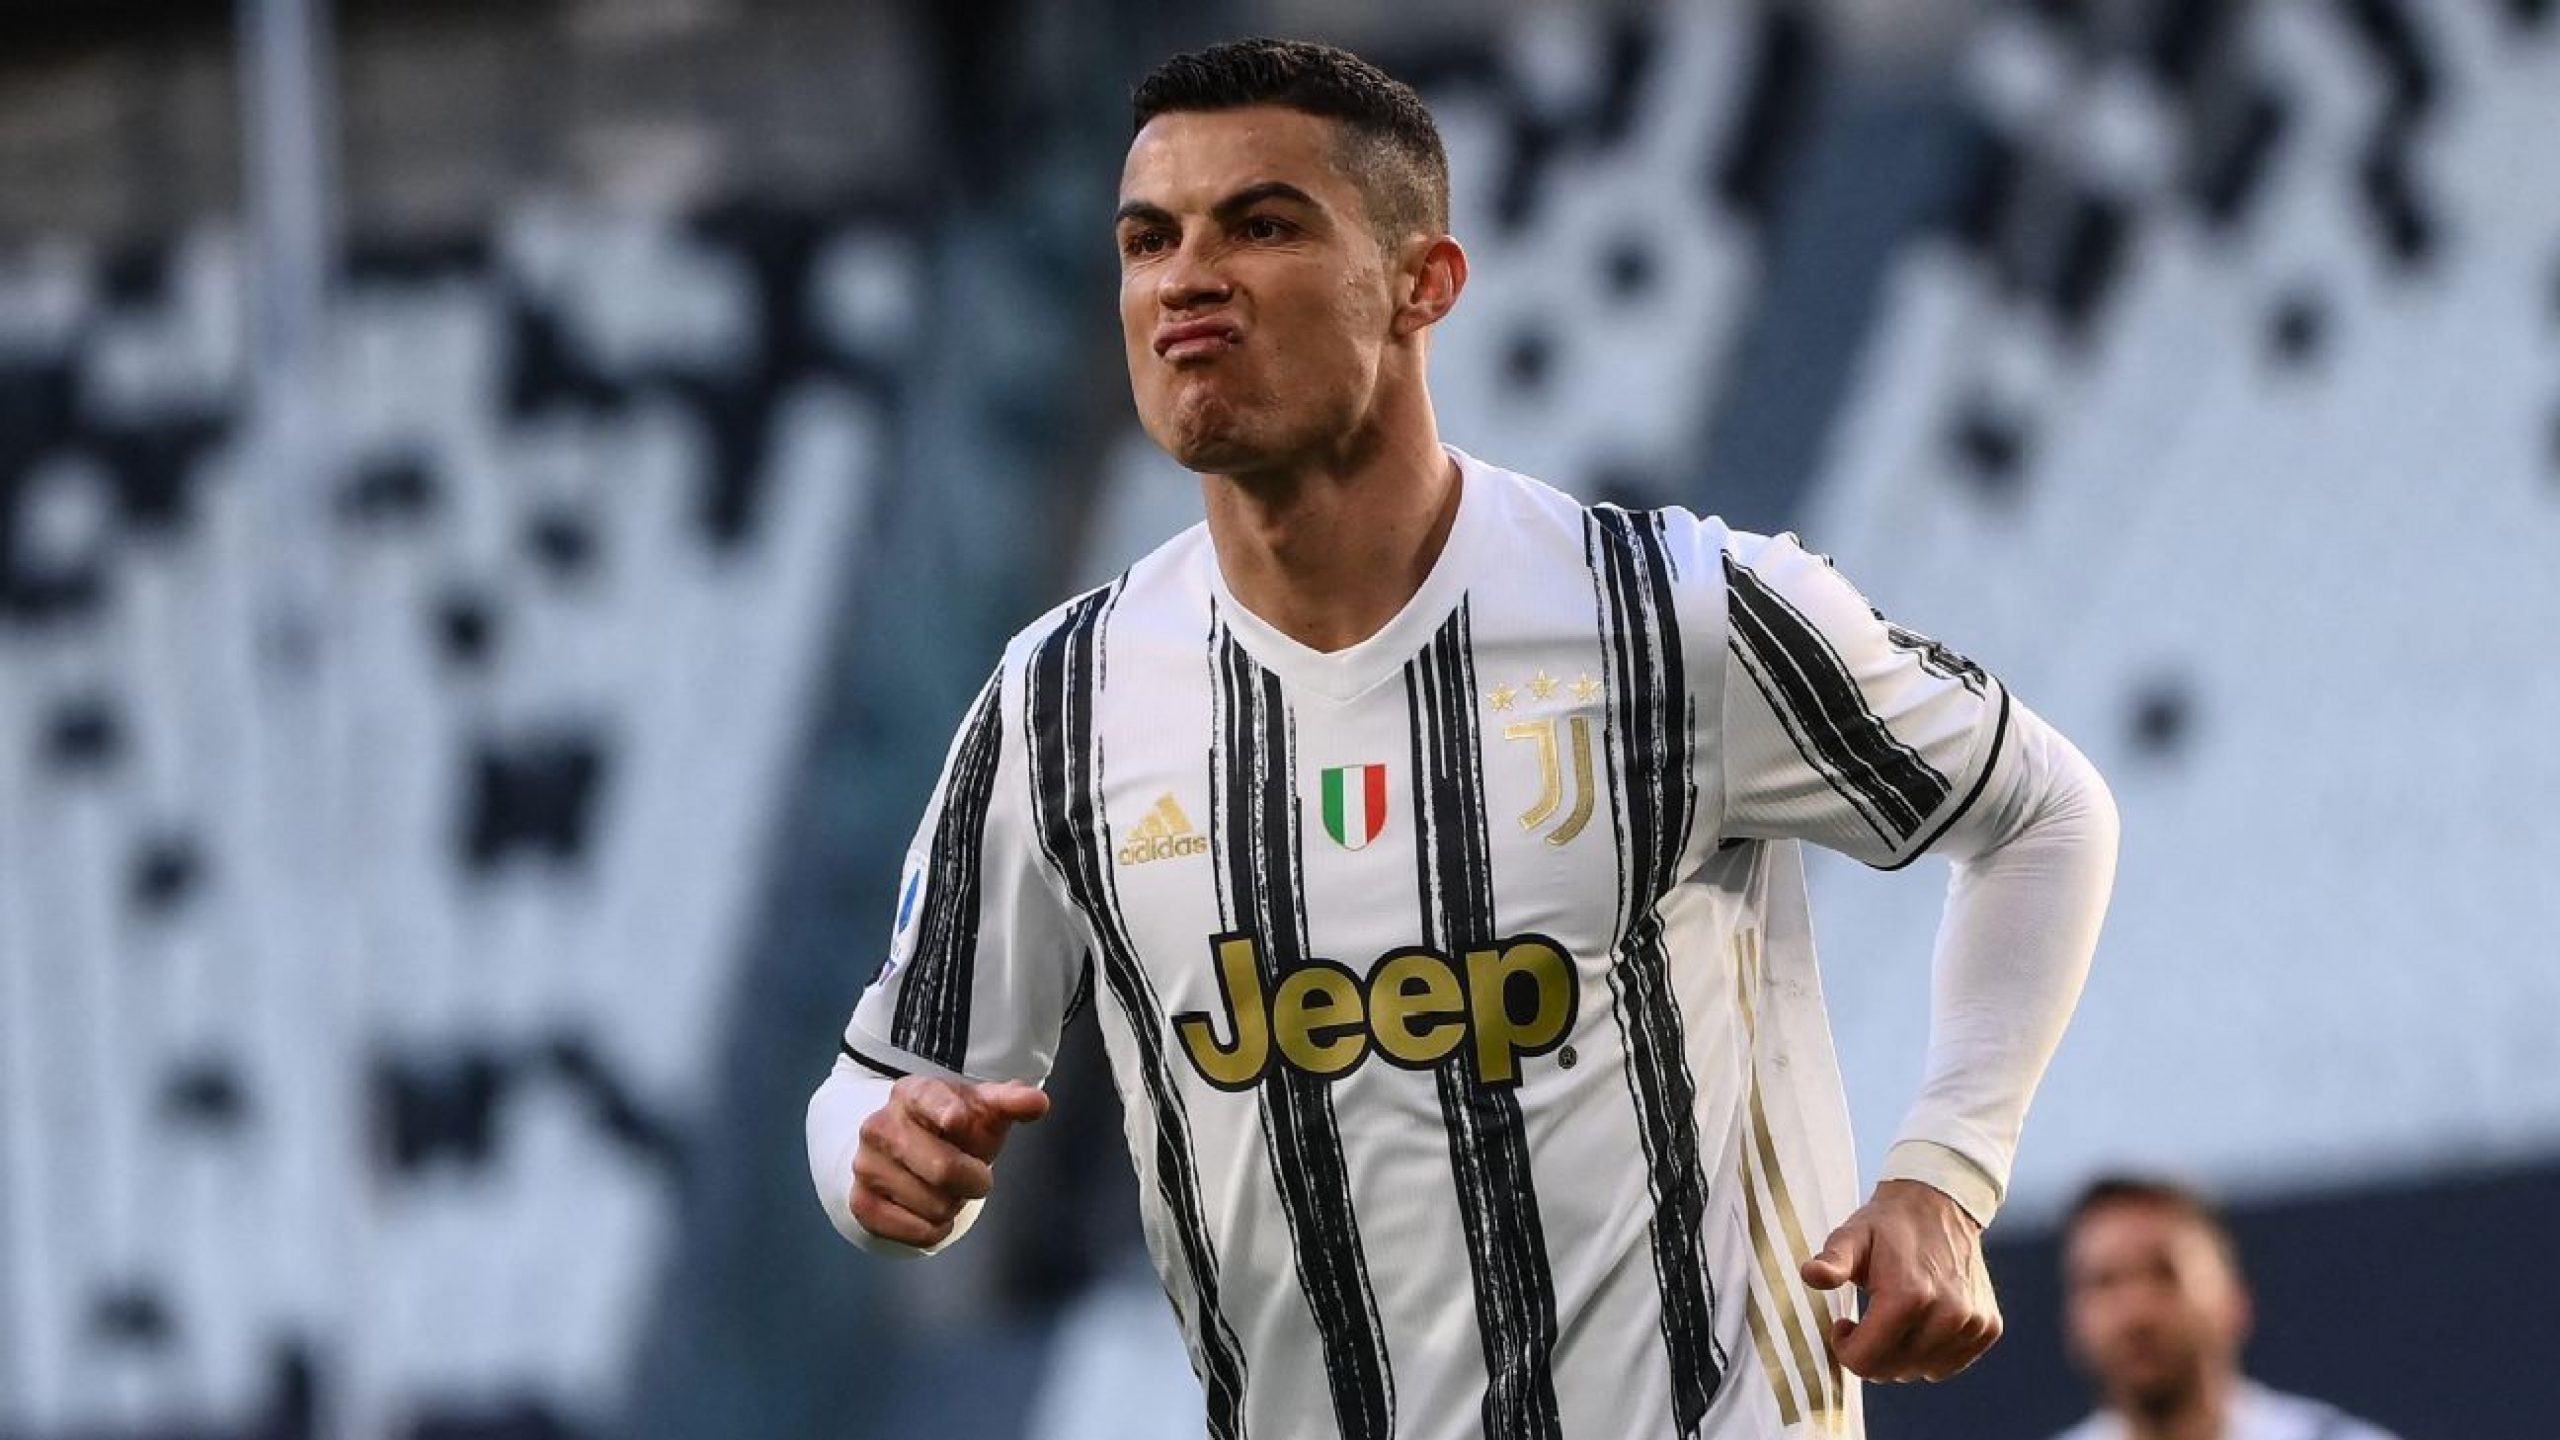 Ronaldo makes history as Serie A top goal scorer